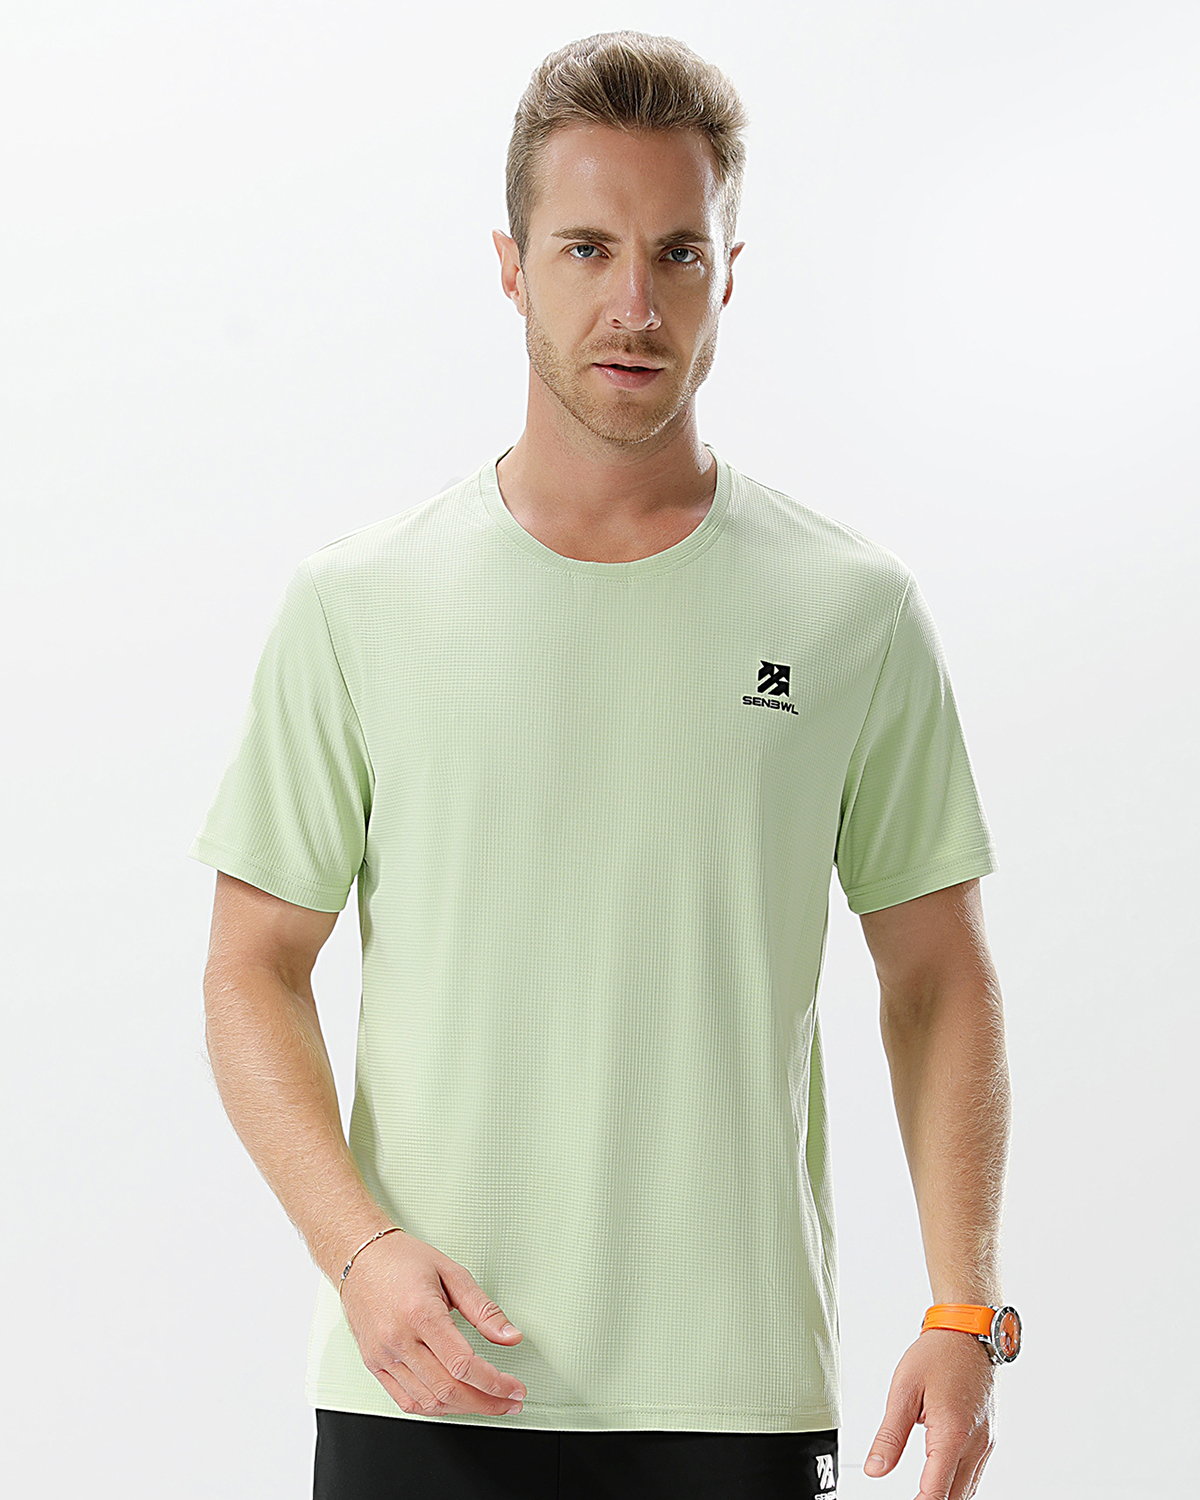 Senbwl Men's Quick Drying Sports T-Shirt-Senbwl Sports